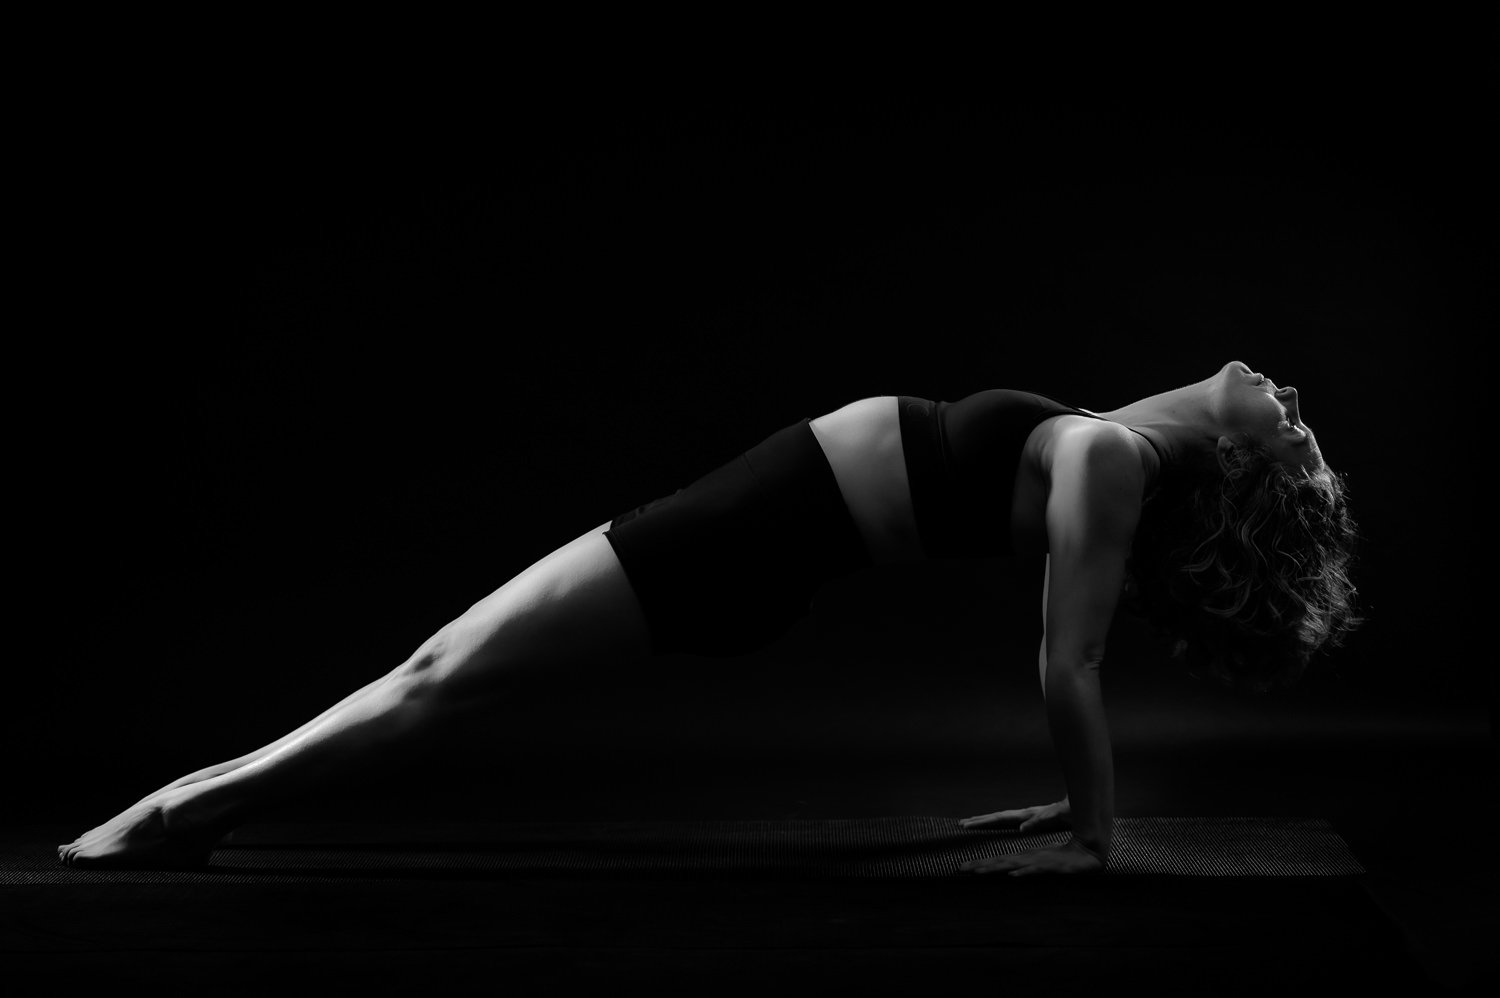 yoga-puurboudoir-artistiek-moody-zwart-wit-cfoto-caroline-6.jpg